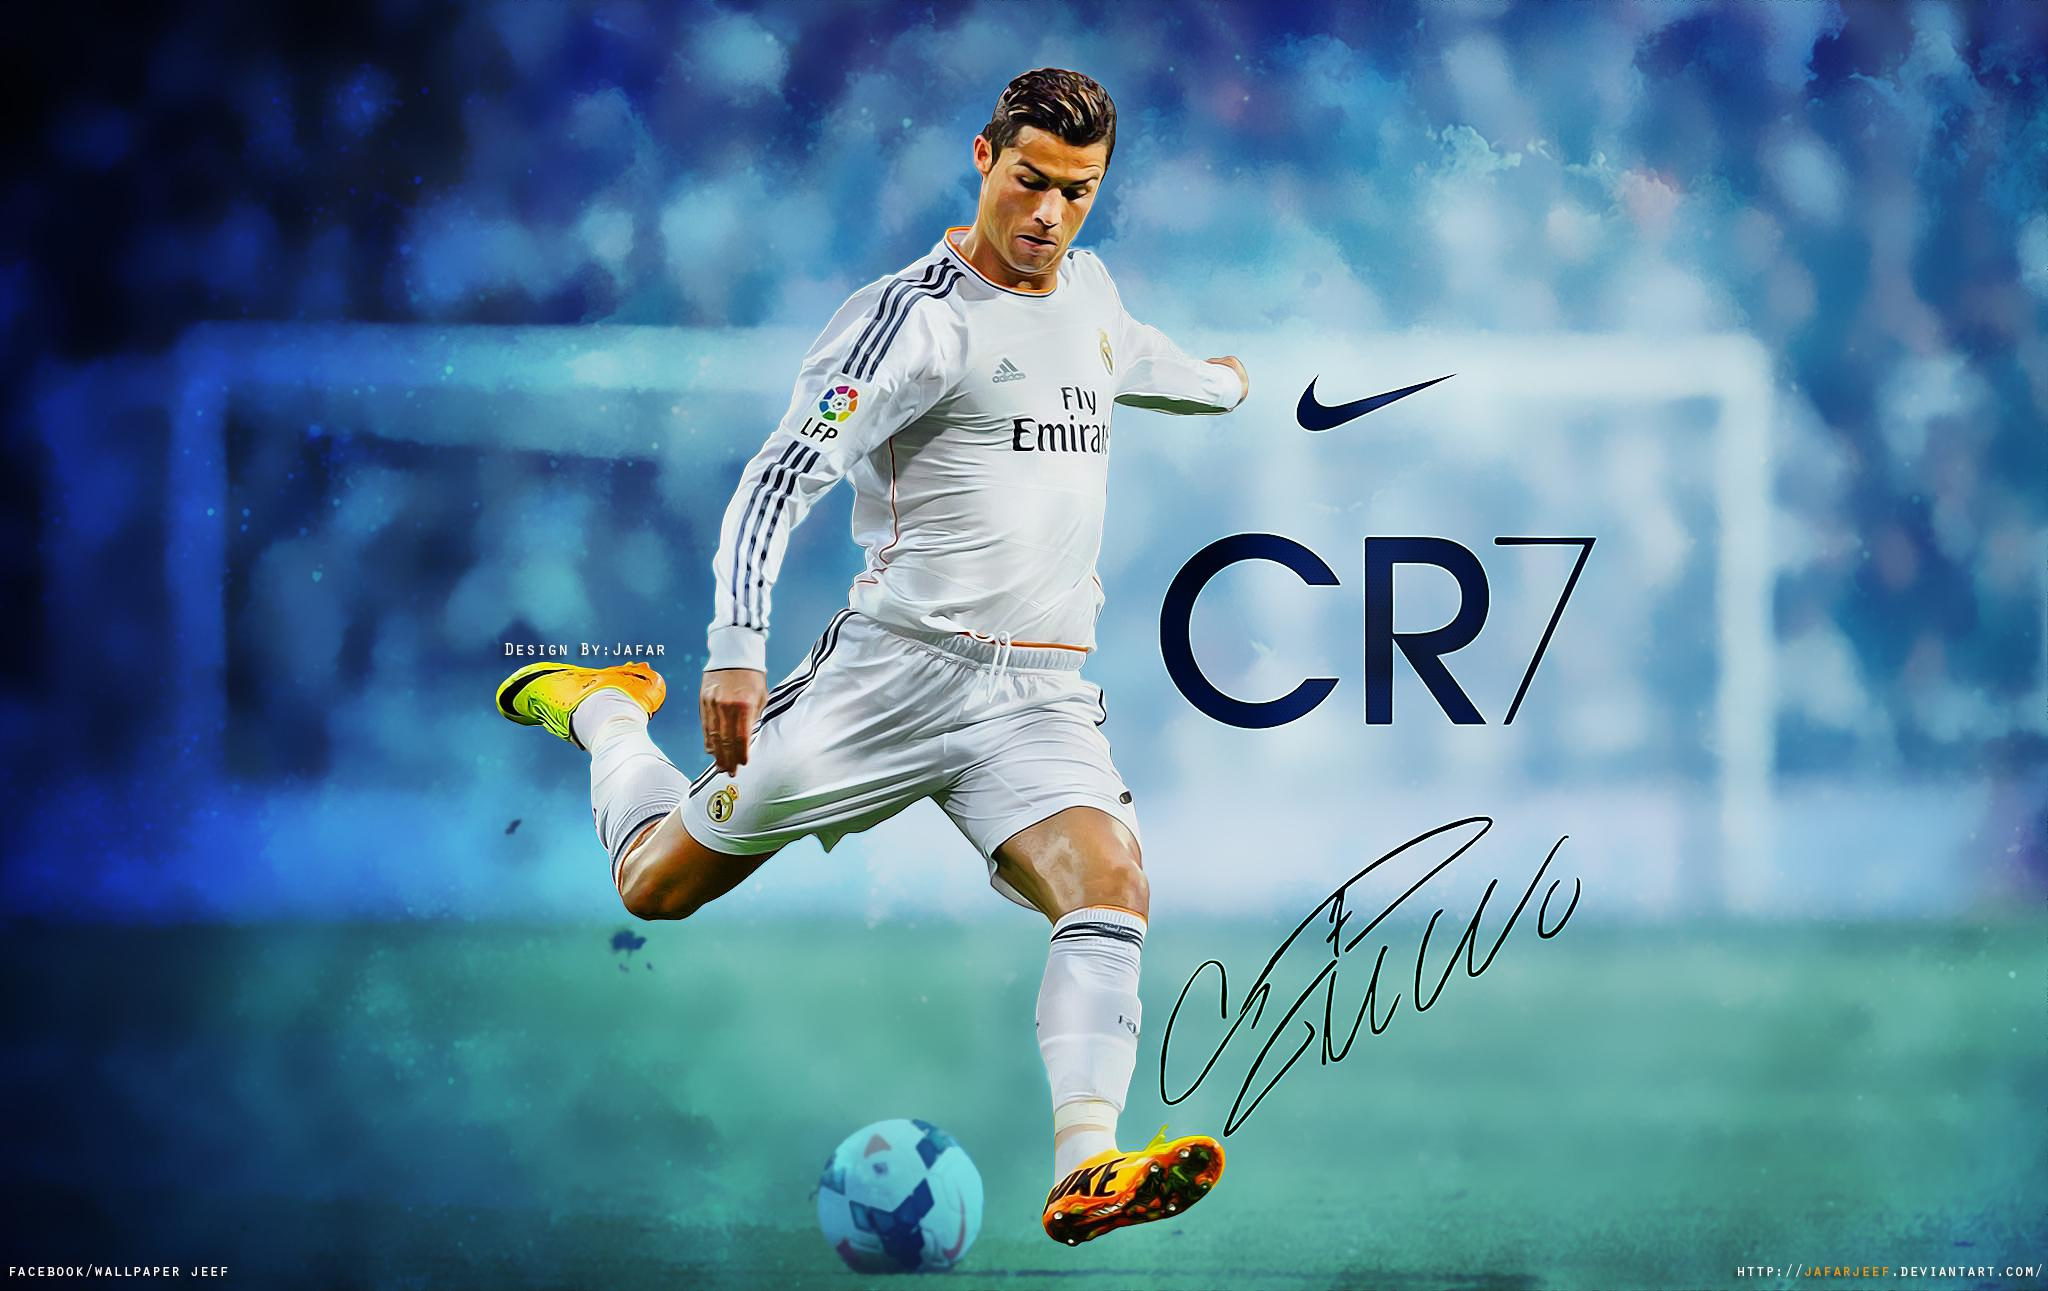 78+] Cristiano Ronaldo Background - WallpaperSafari